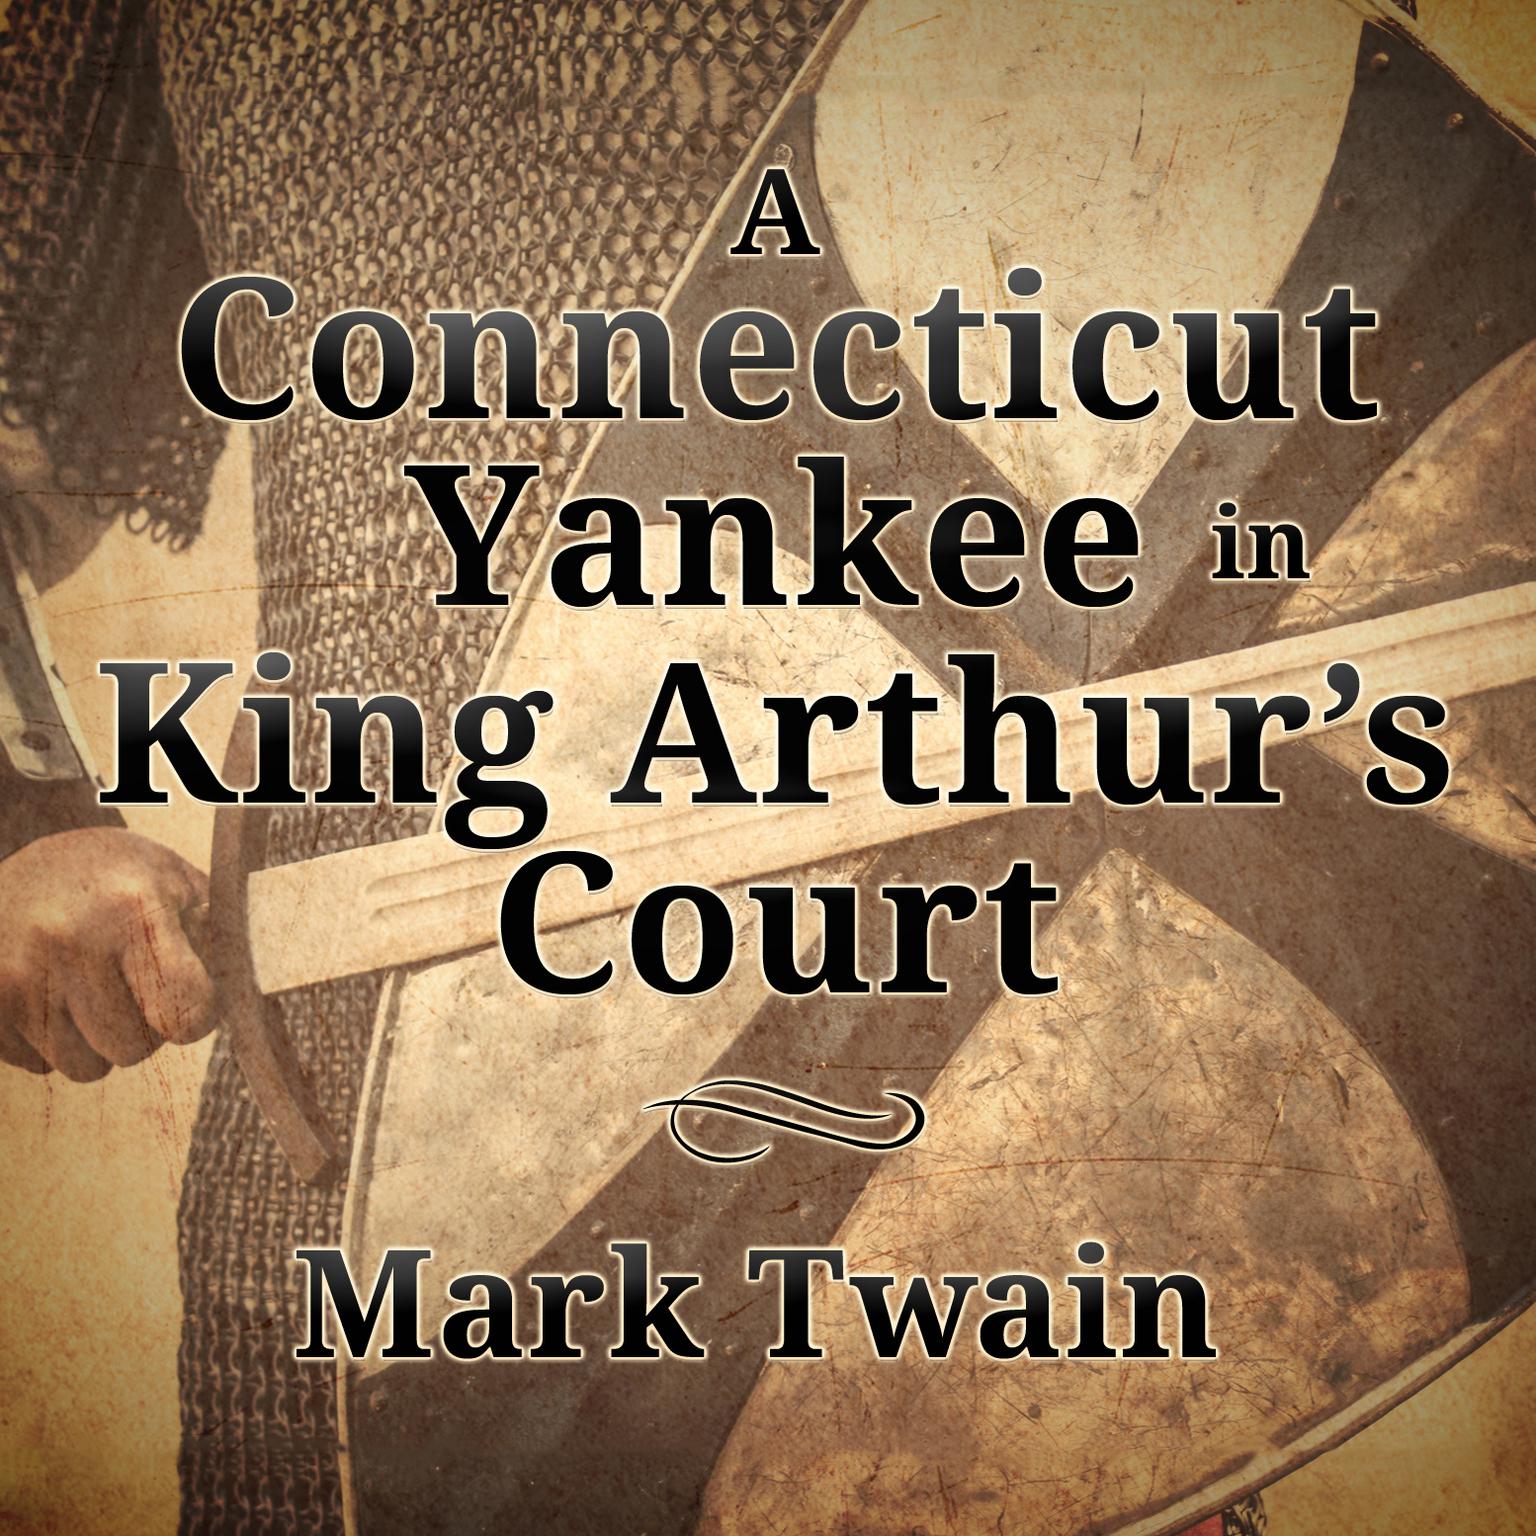 A Connecticut Yankee in King Arthur #39 s Court Audiobook by Mark Twain